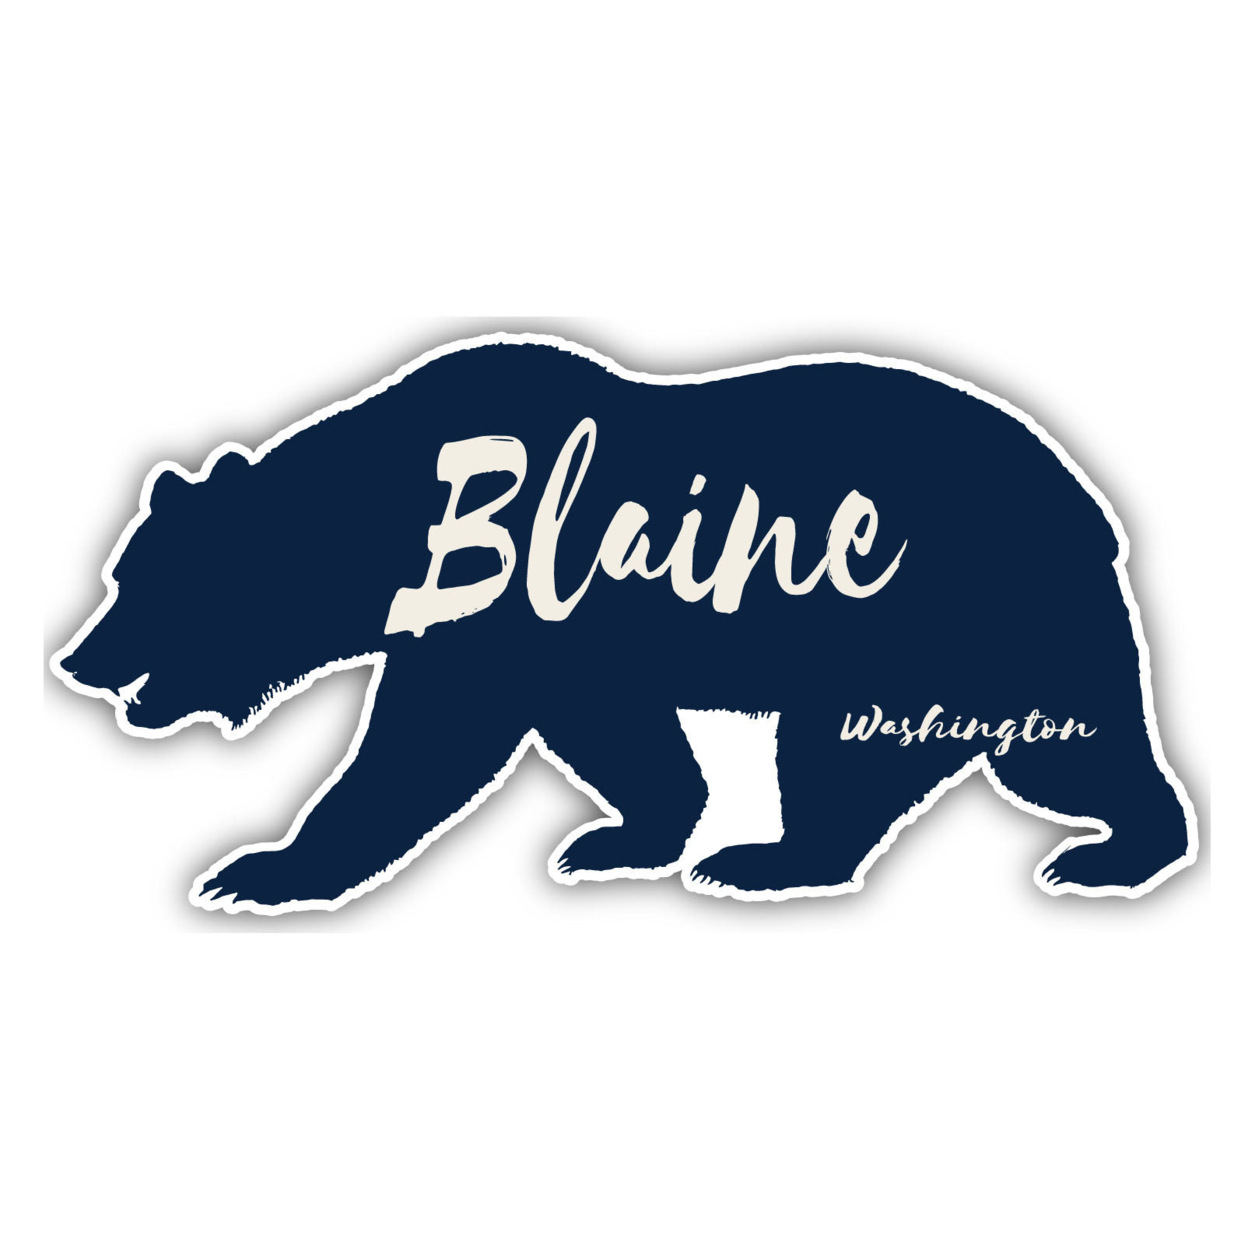 Blaine Washington Souvenir Decorative Stickers (Choose Theme And Size) - Single Unit, 4-Inch, Adventures Awaits